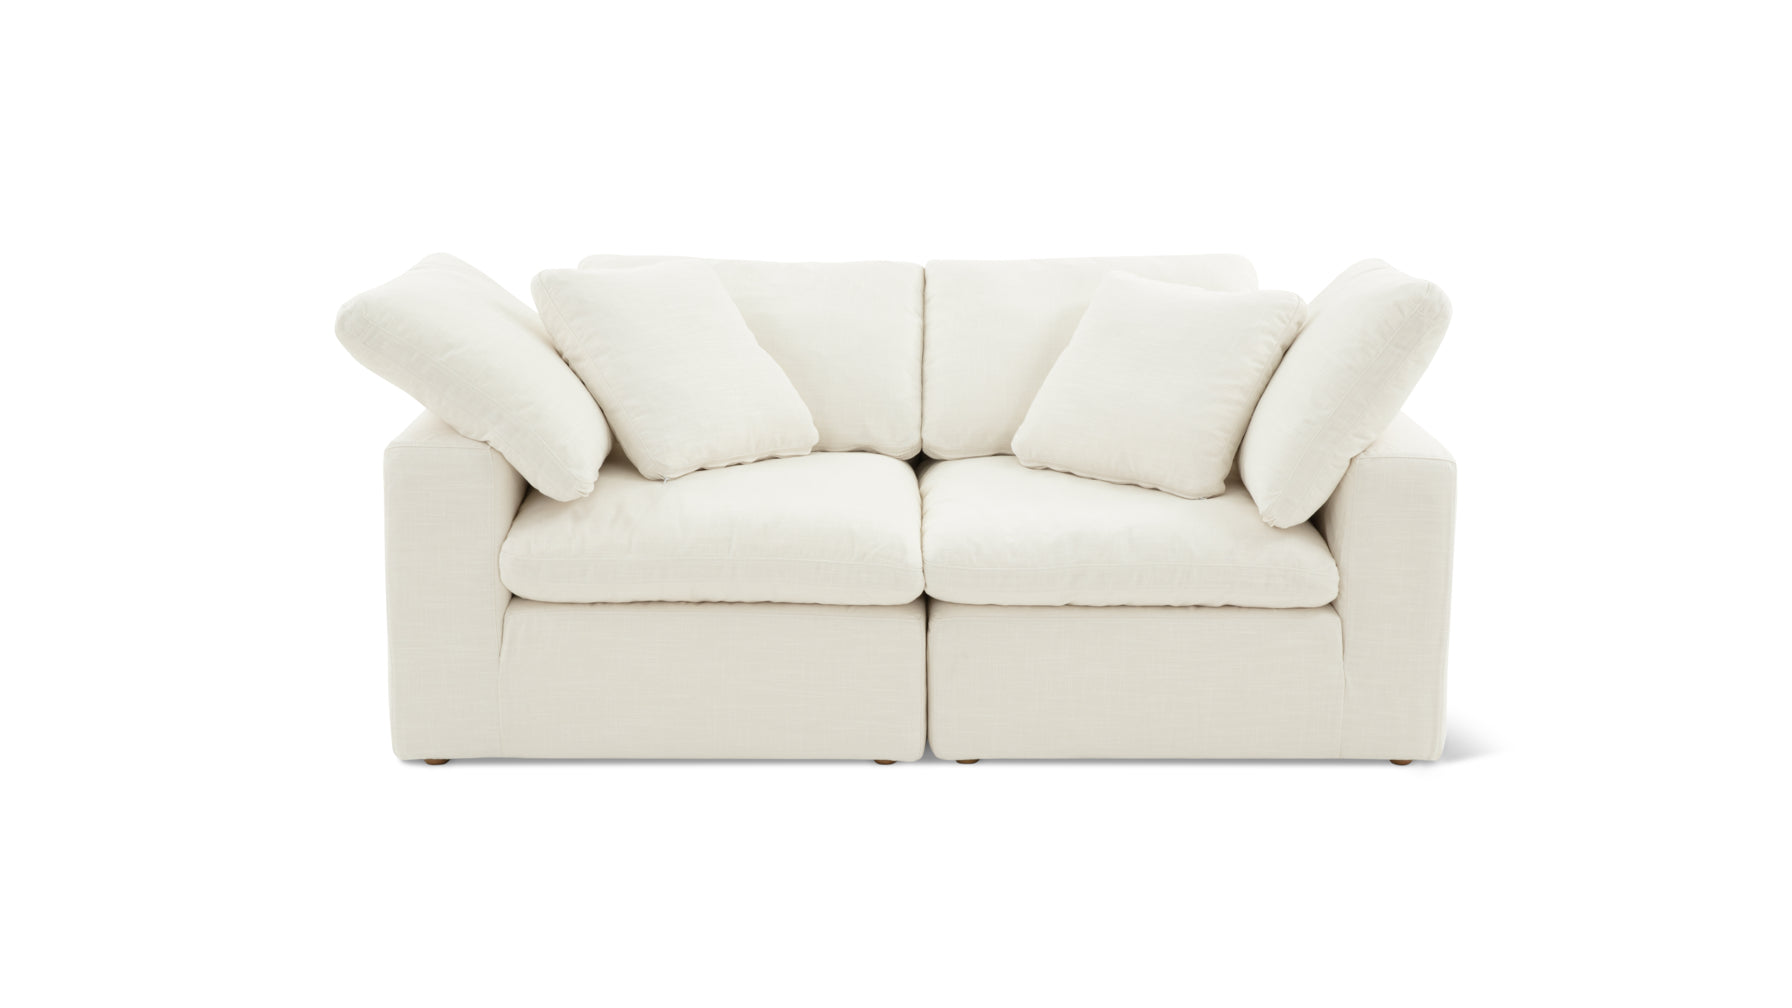 Movie Night™ 2-Piece Modular Sofa, Standard, Cream Linen - Image 1